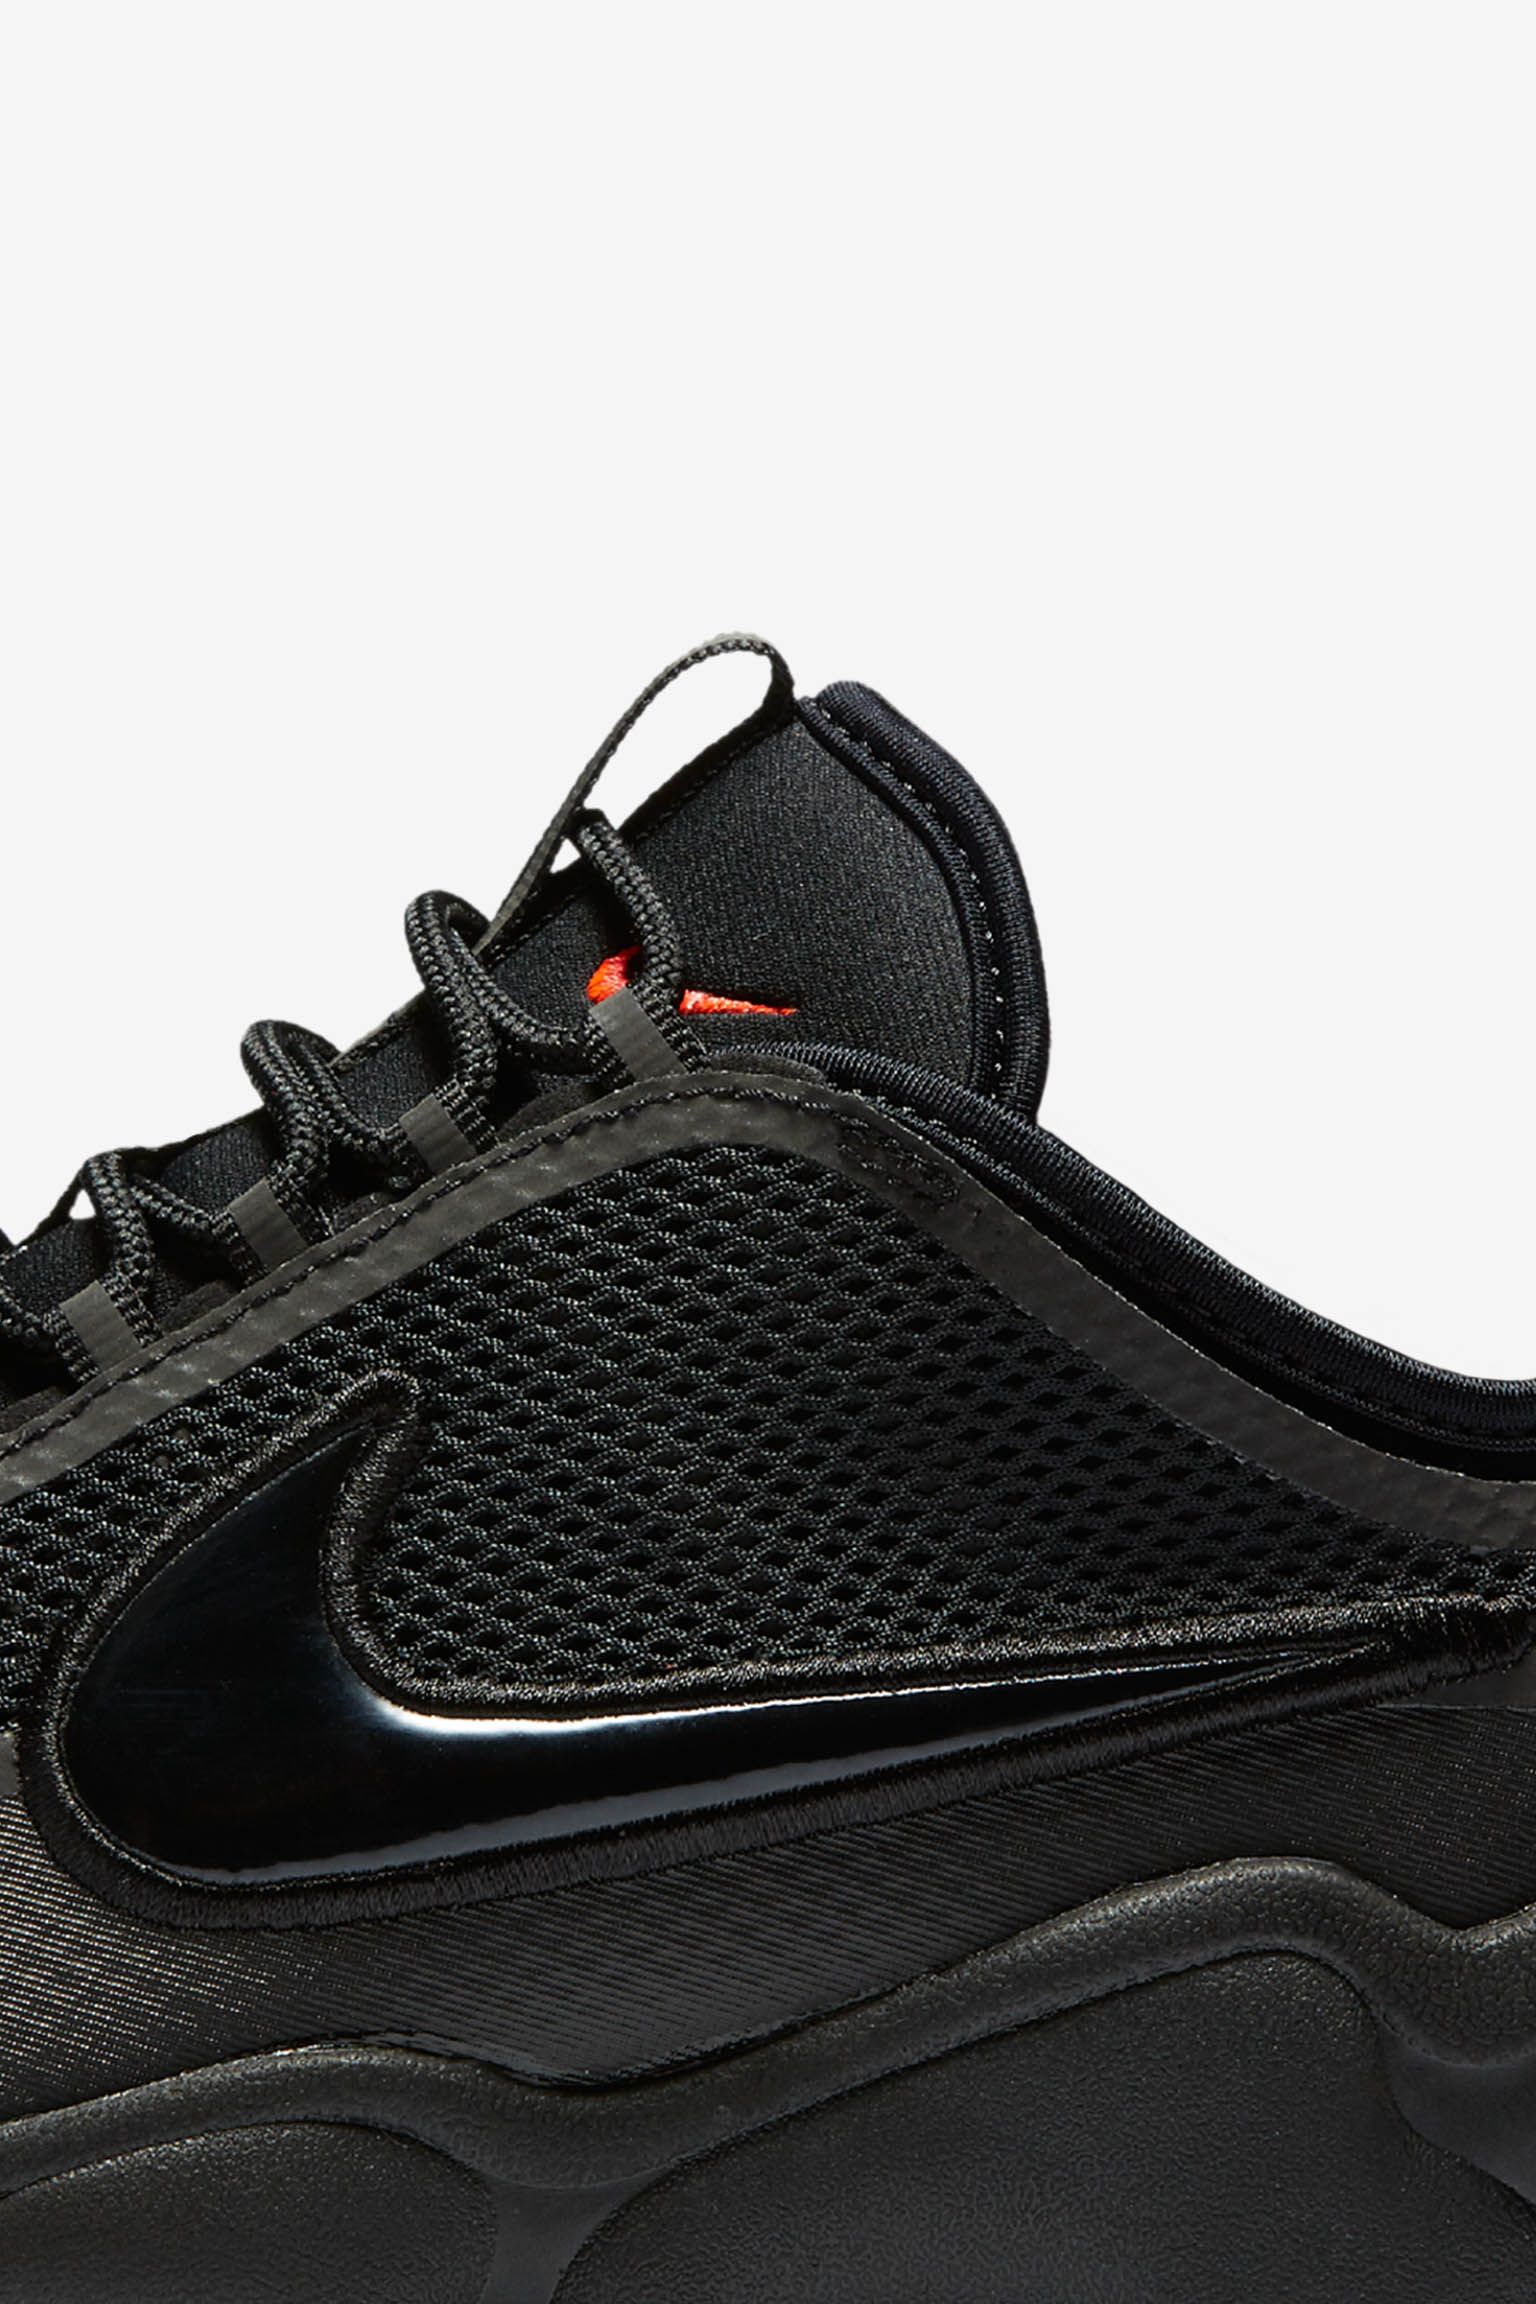 Correctamente Faceta cerrar Nike Air Zoom Spiridon 'Black &amp; Bright Crimson'. Nike SNKRS GB